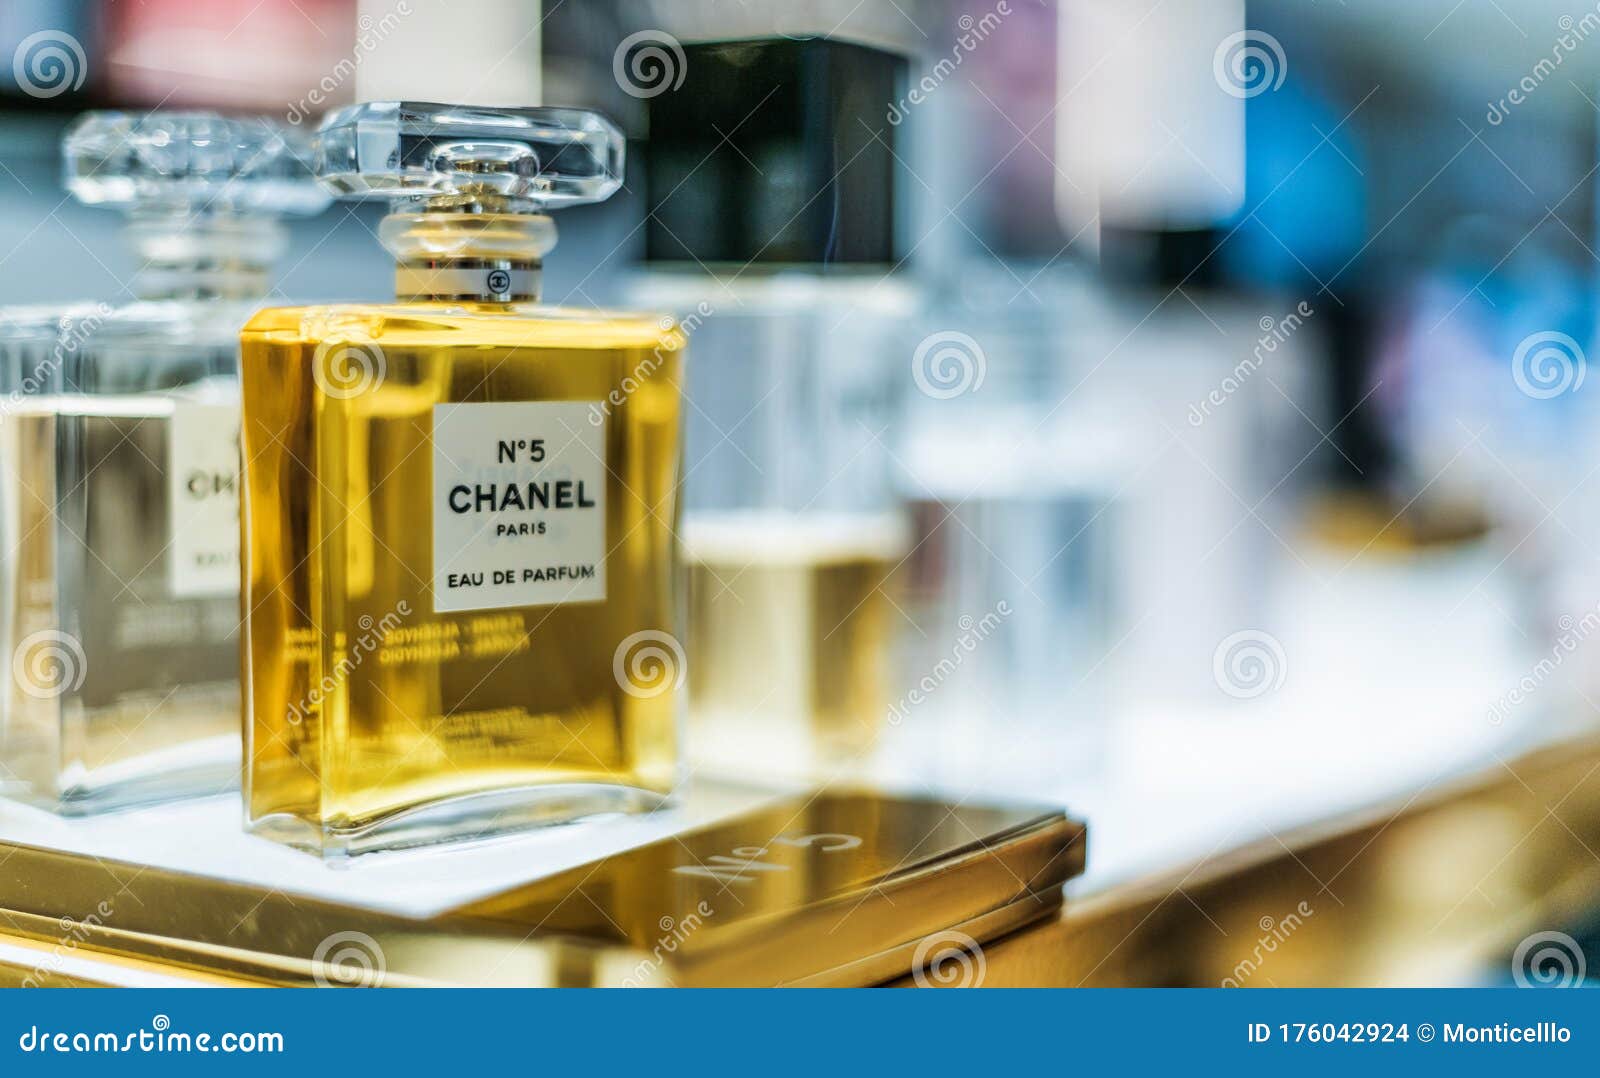 chanel 5 parfum